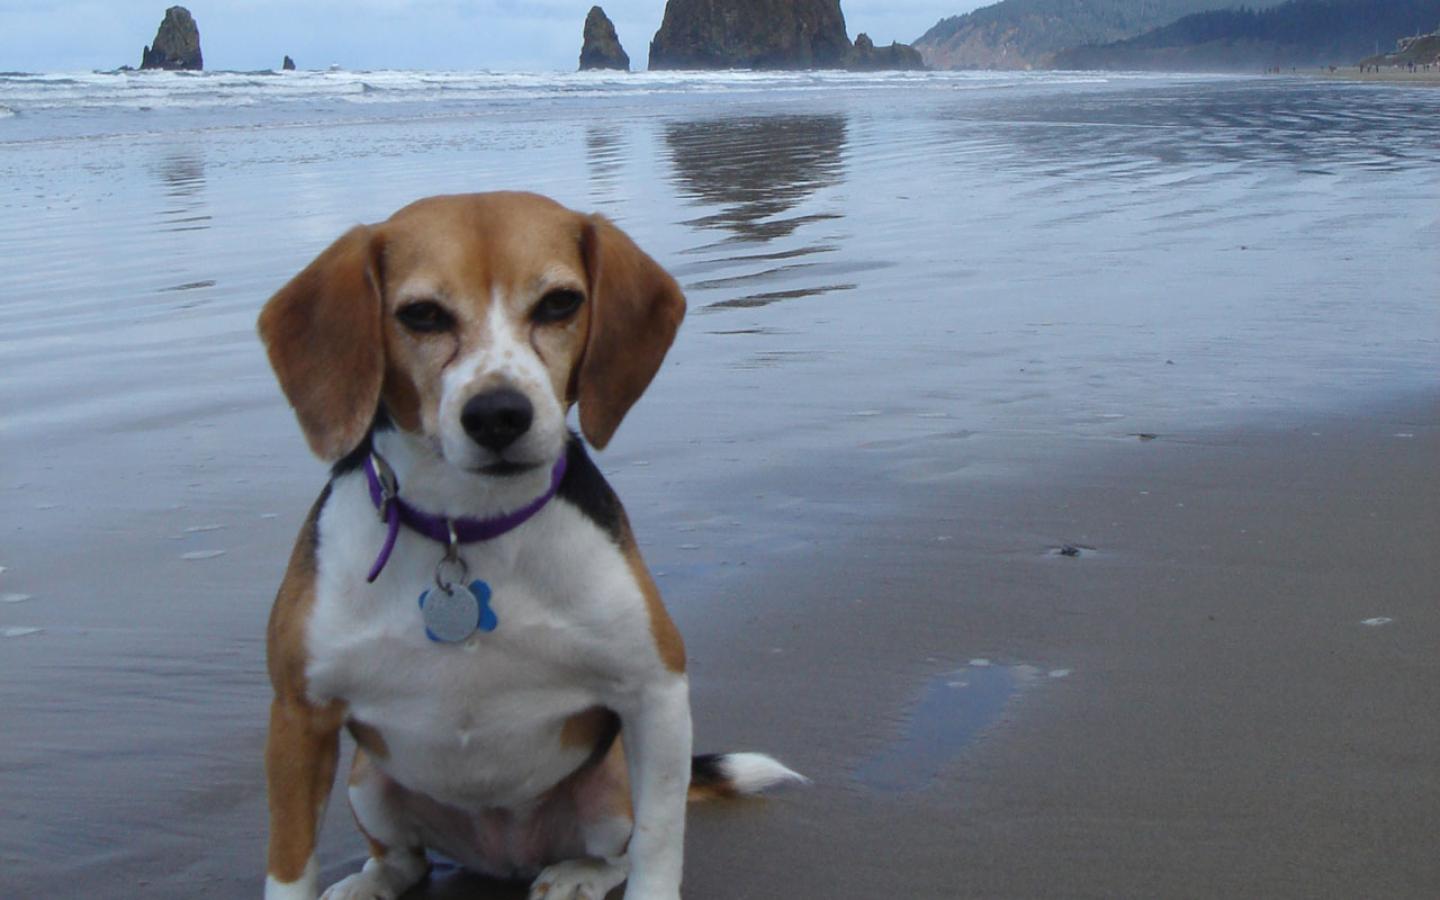 Beagle - At Cannon Beach, Oregon Wallpaper #2 1440 x 900 